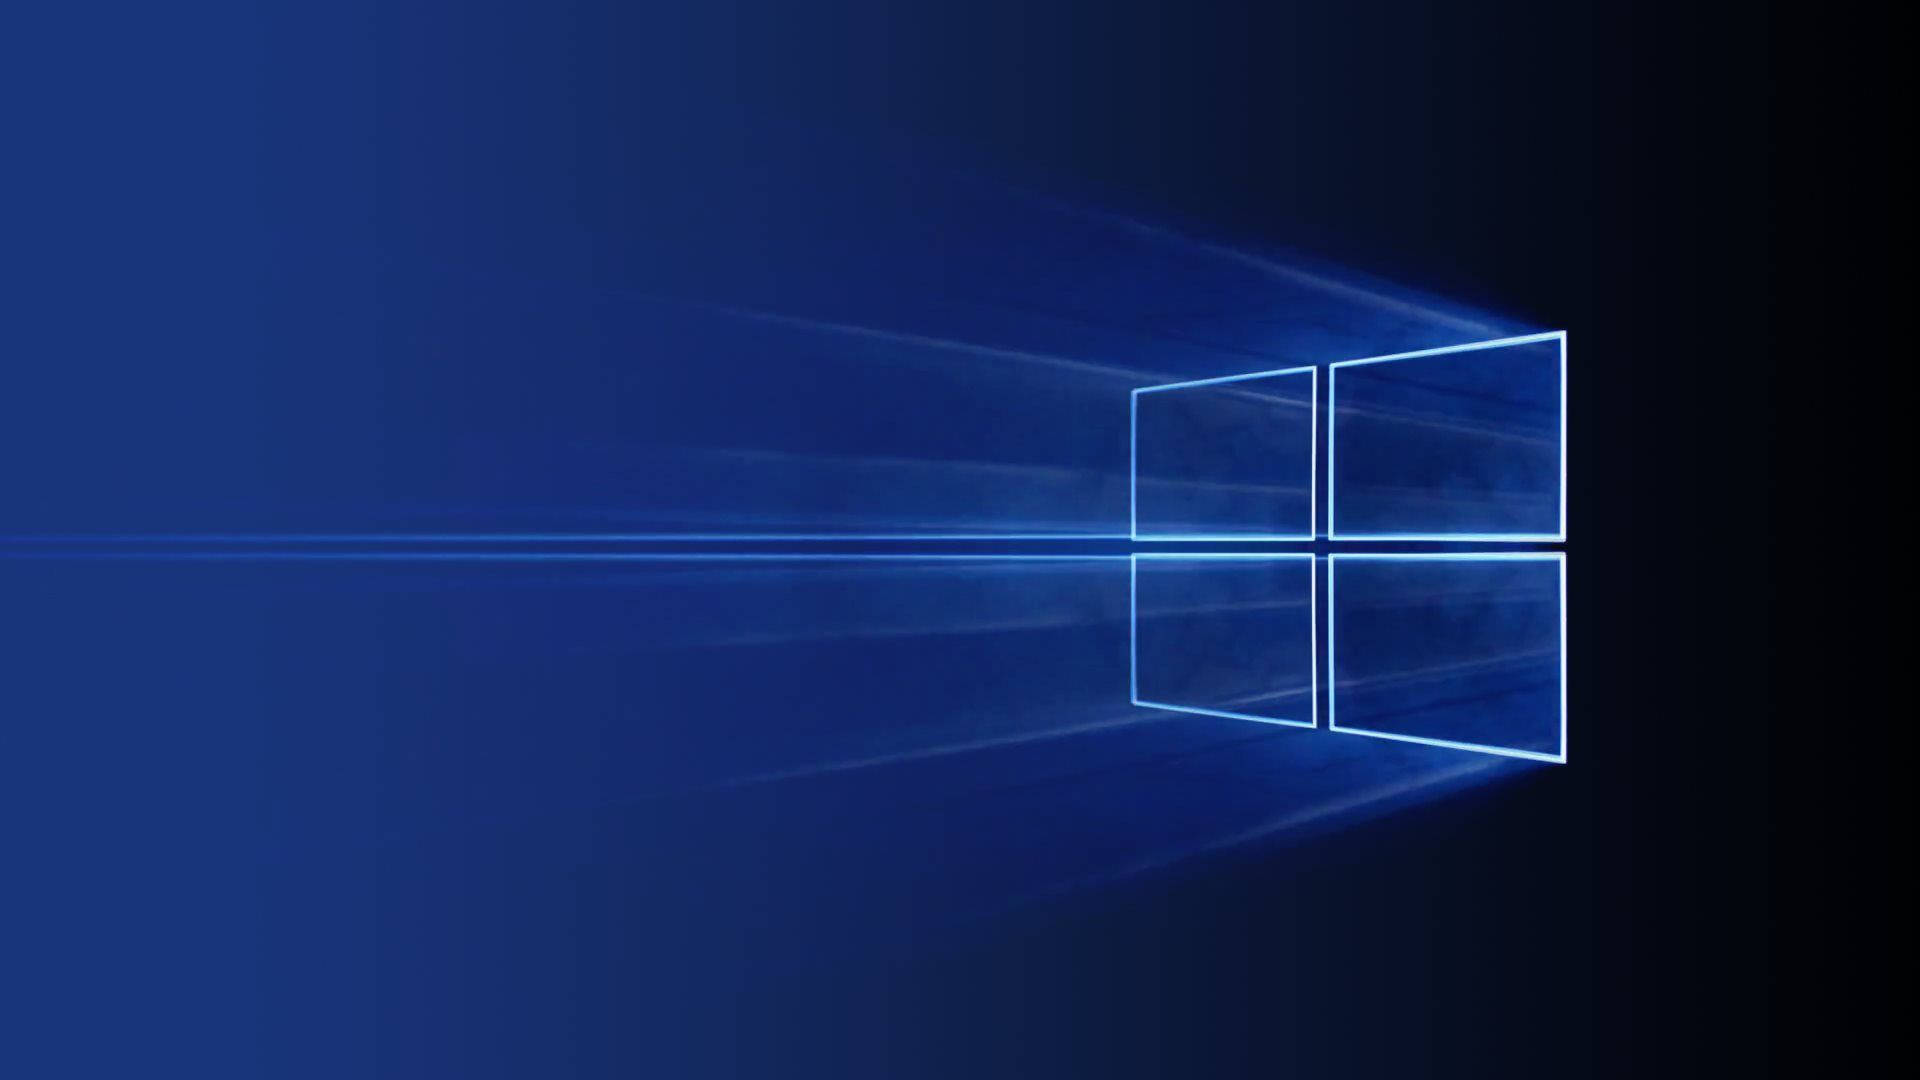 Microsoft Windows Logo Represented in Light Wallpaper